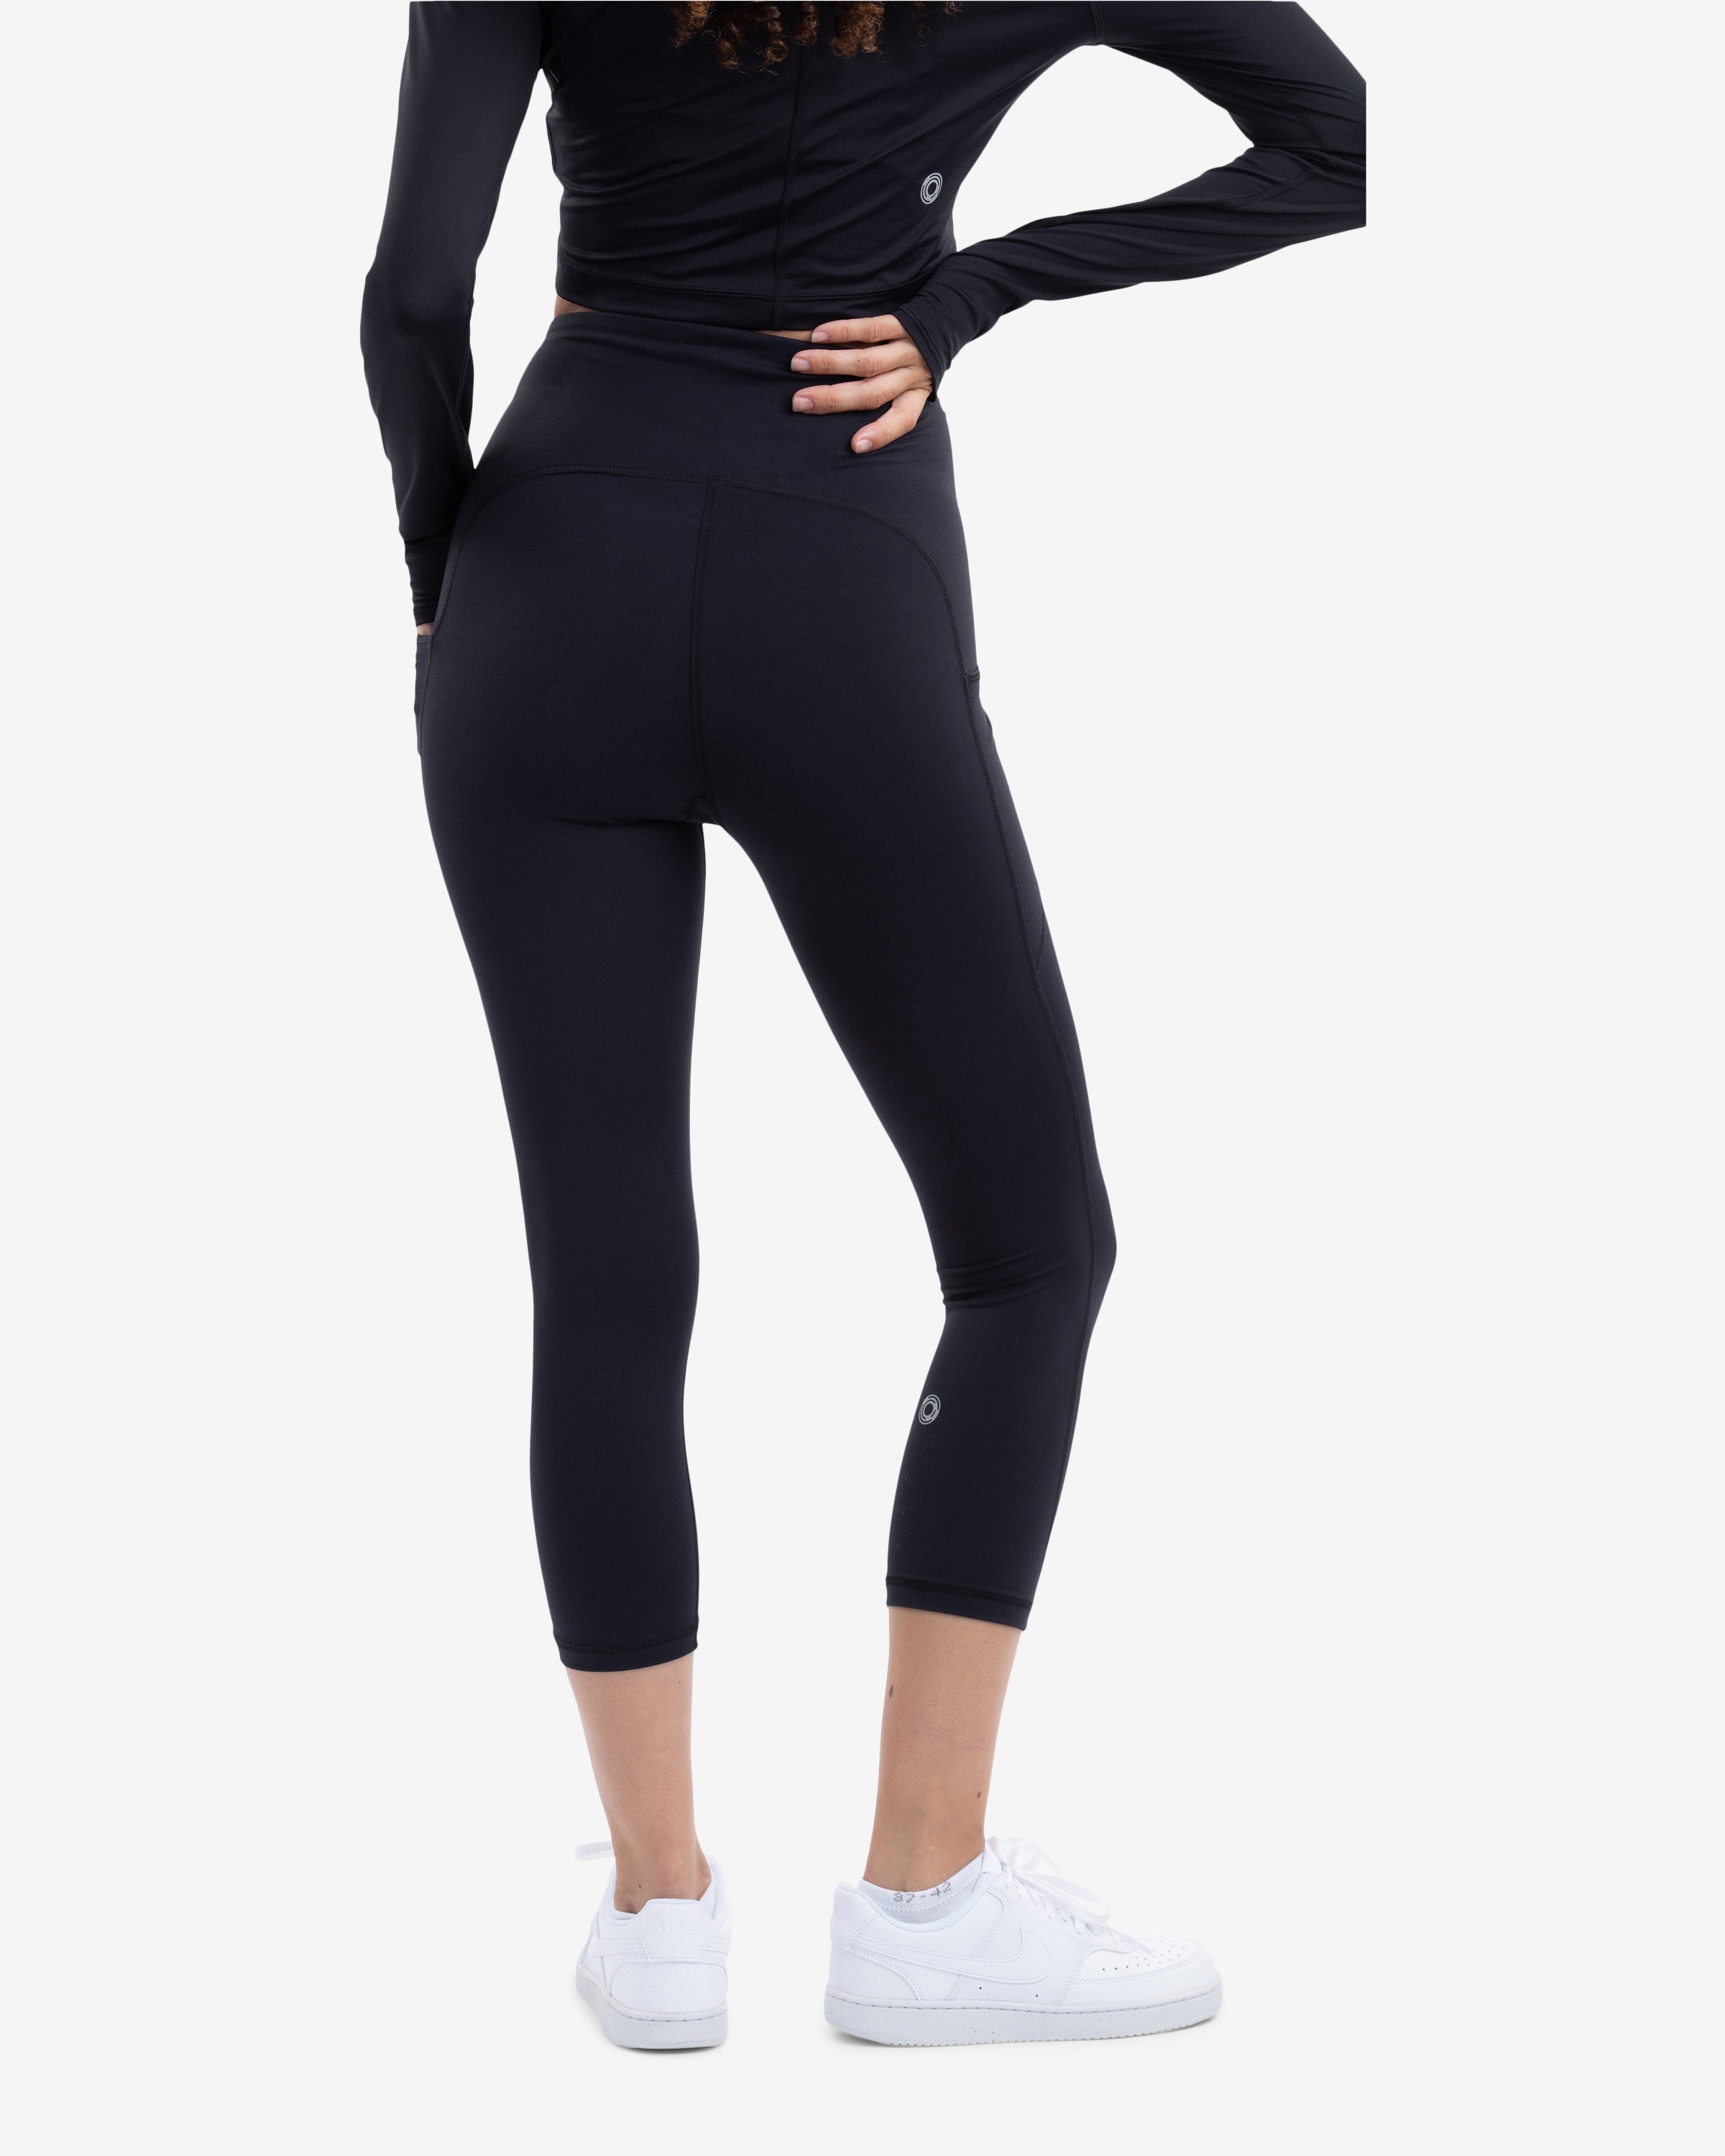 Adore Women Yoga Pants High Waist Fitness Running Leggings Sport Quick Dry  Workout Leggins With Pocket 2060-Black